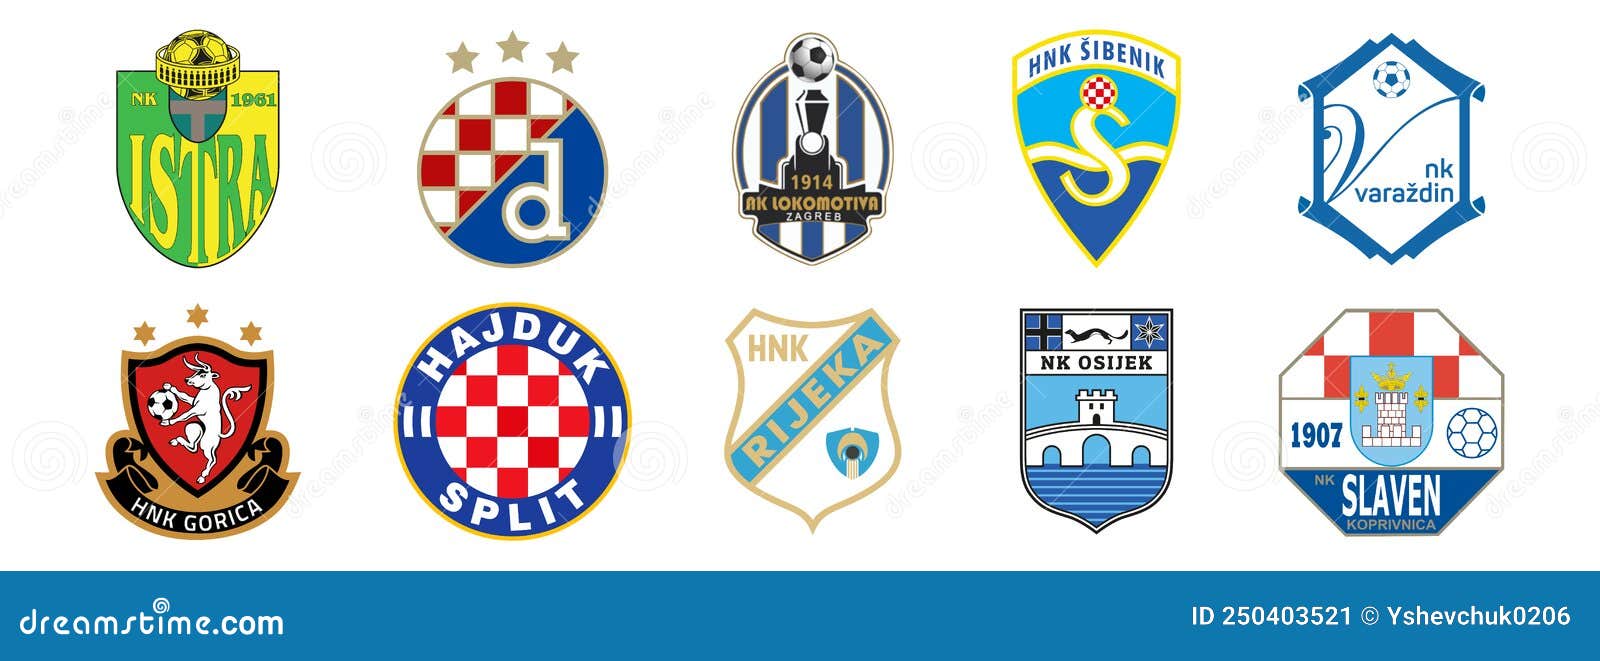 Croatia National GNK Dinamo Zagreb HNK Gorica Hajduk Split 